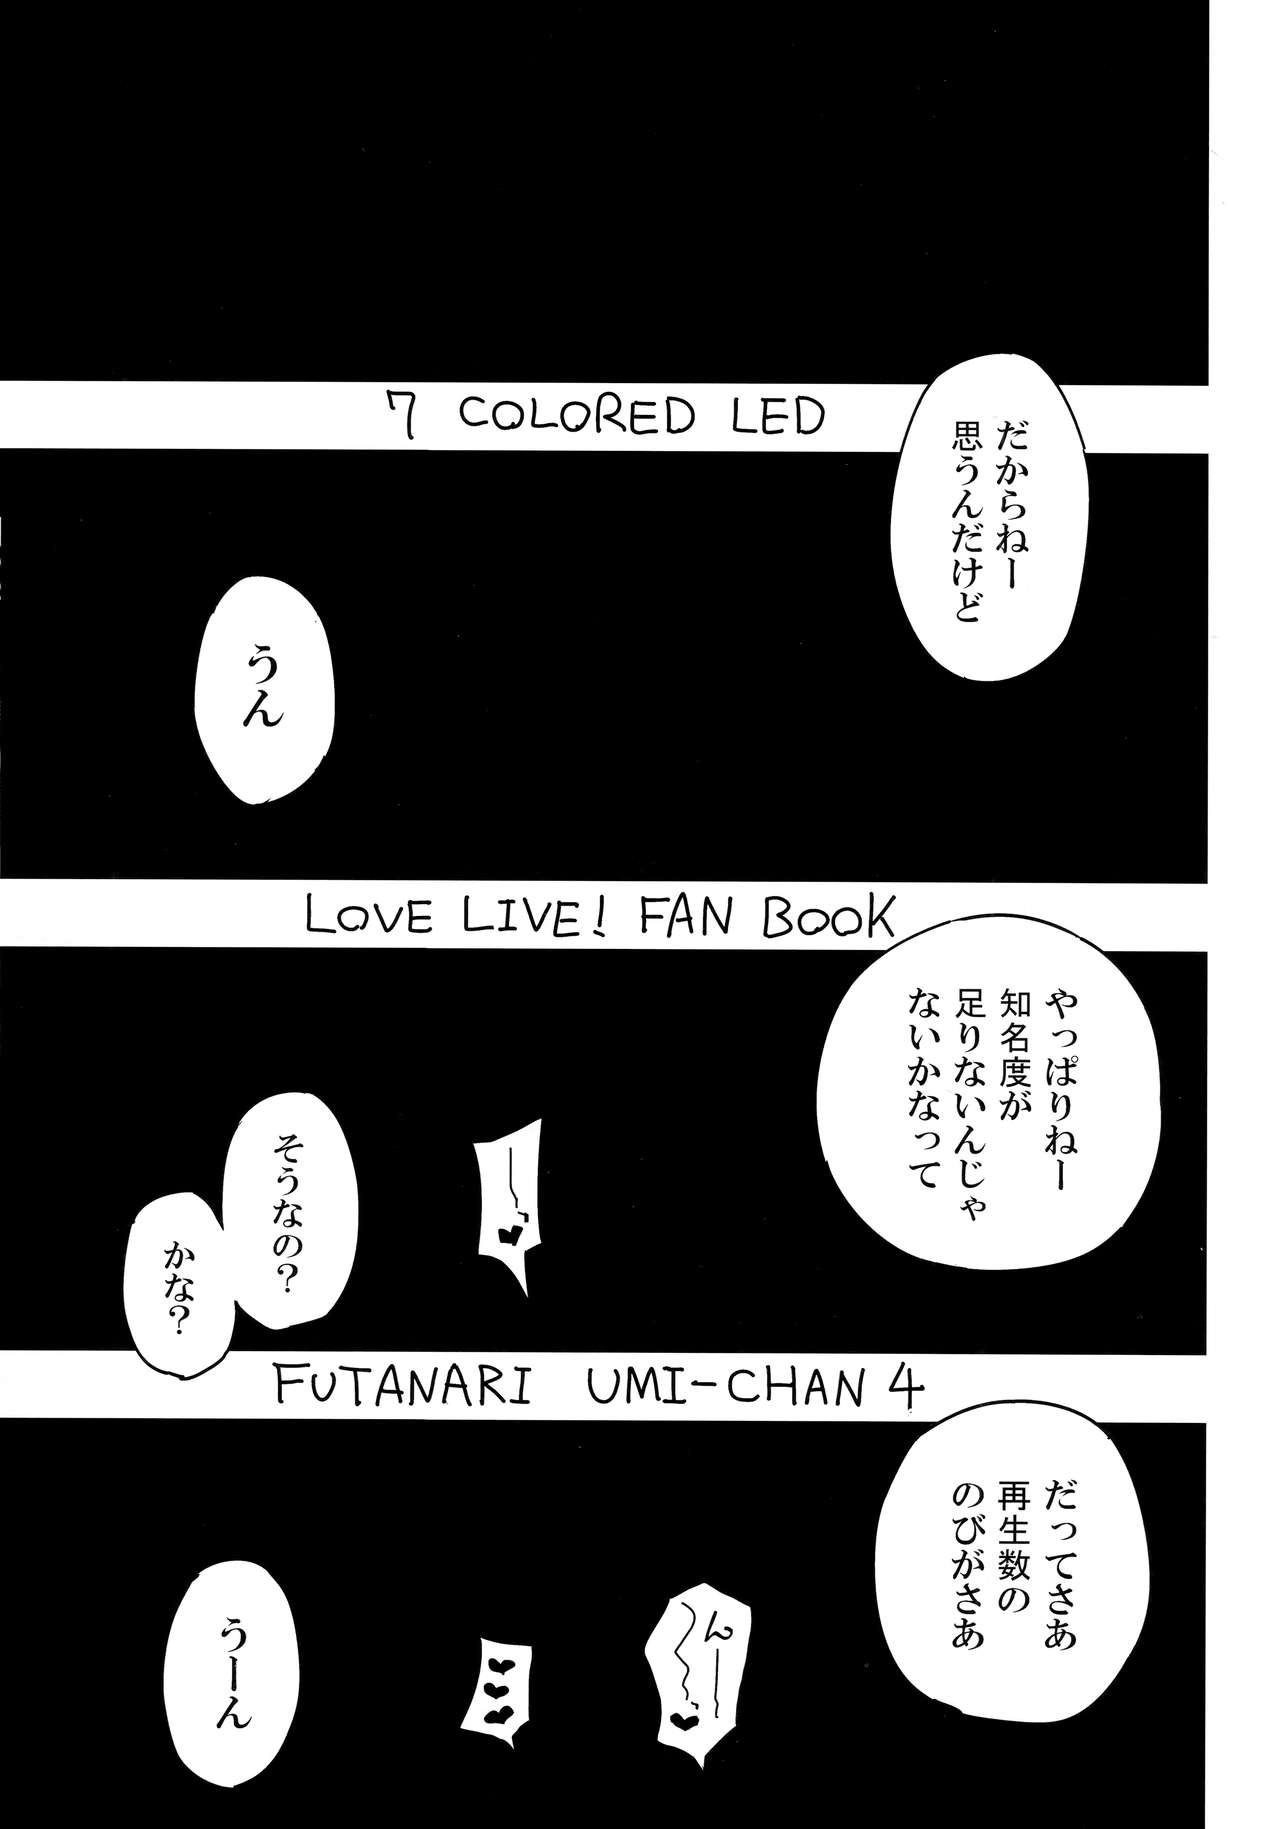 Deflowered Futanari Umi-chan 4 - Love live Chupada - Page 2